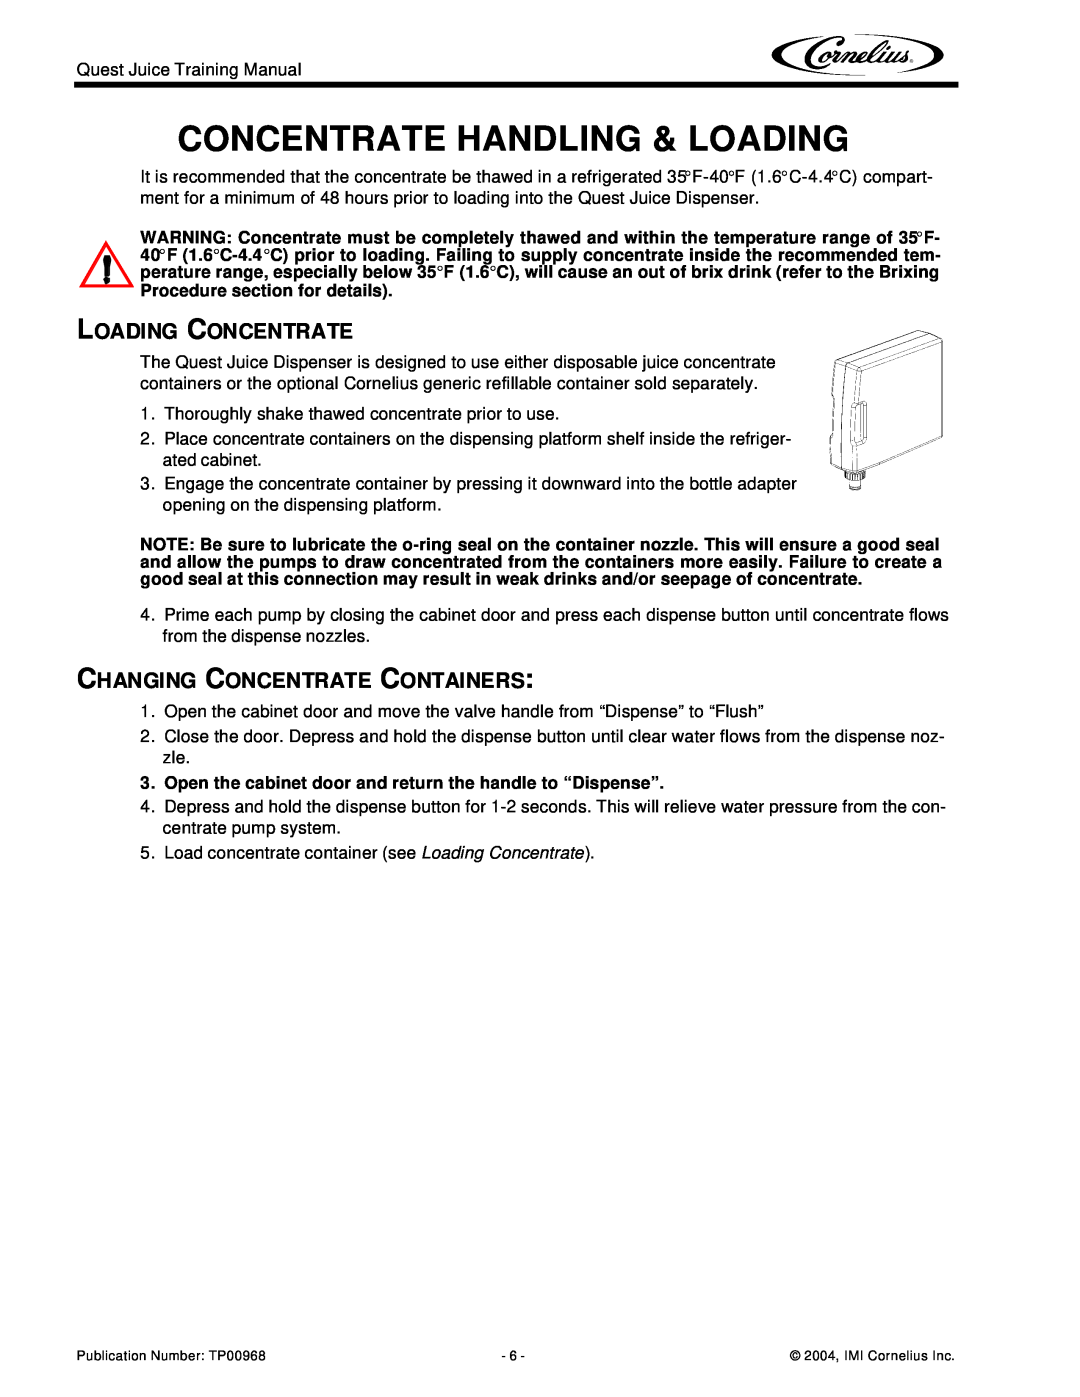 Cornelius 4 Flavor, 2 Flavor manual Concentrate Handling & Loading, Loading Concentrate, Changing Concentrate Containers 